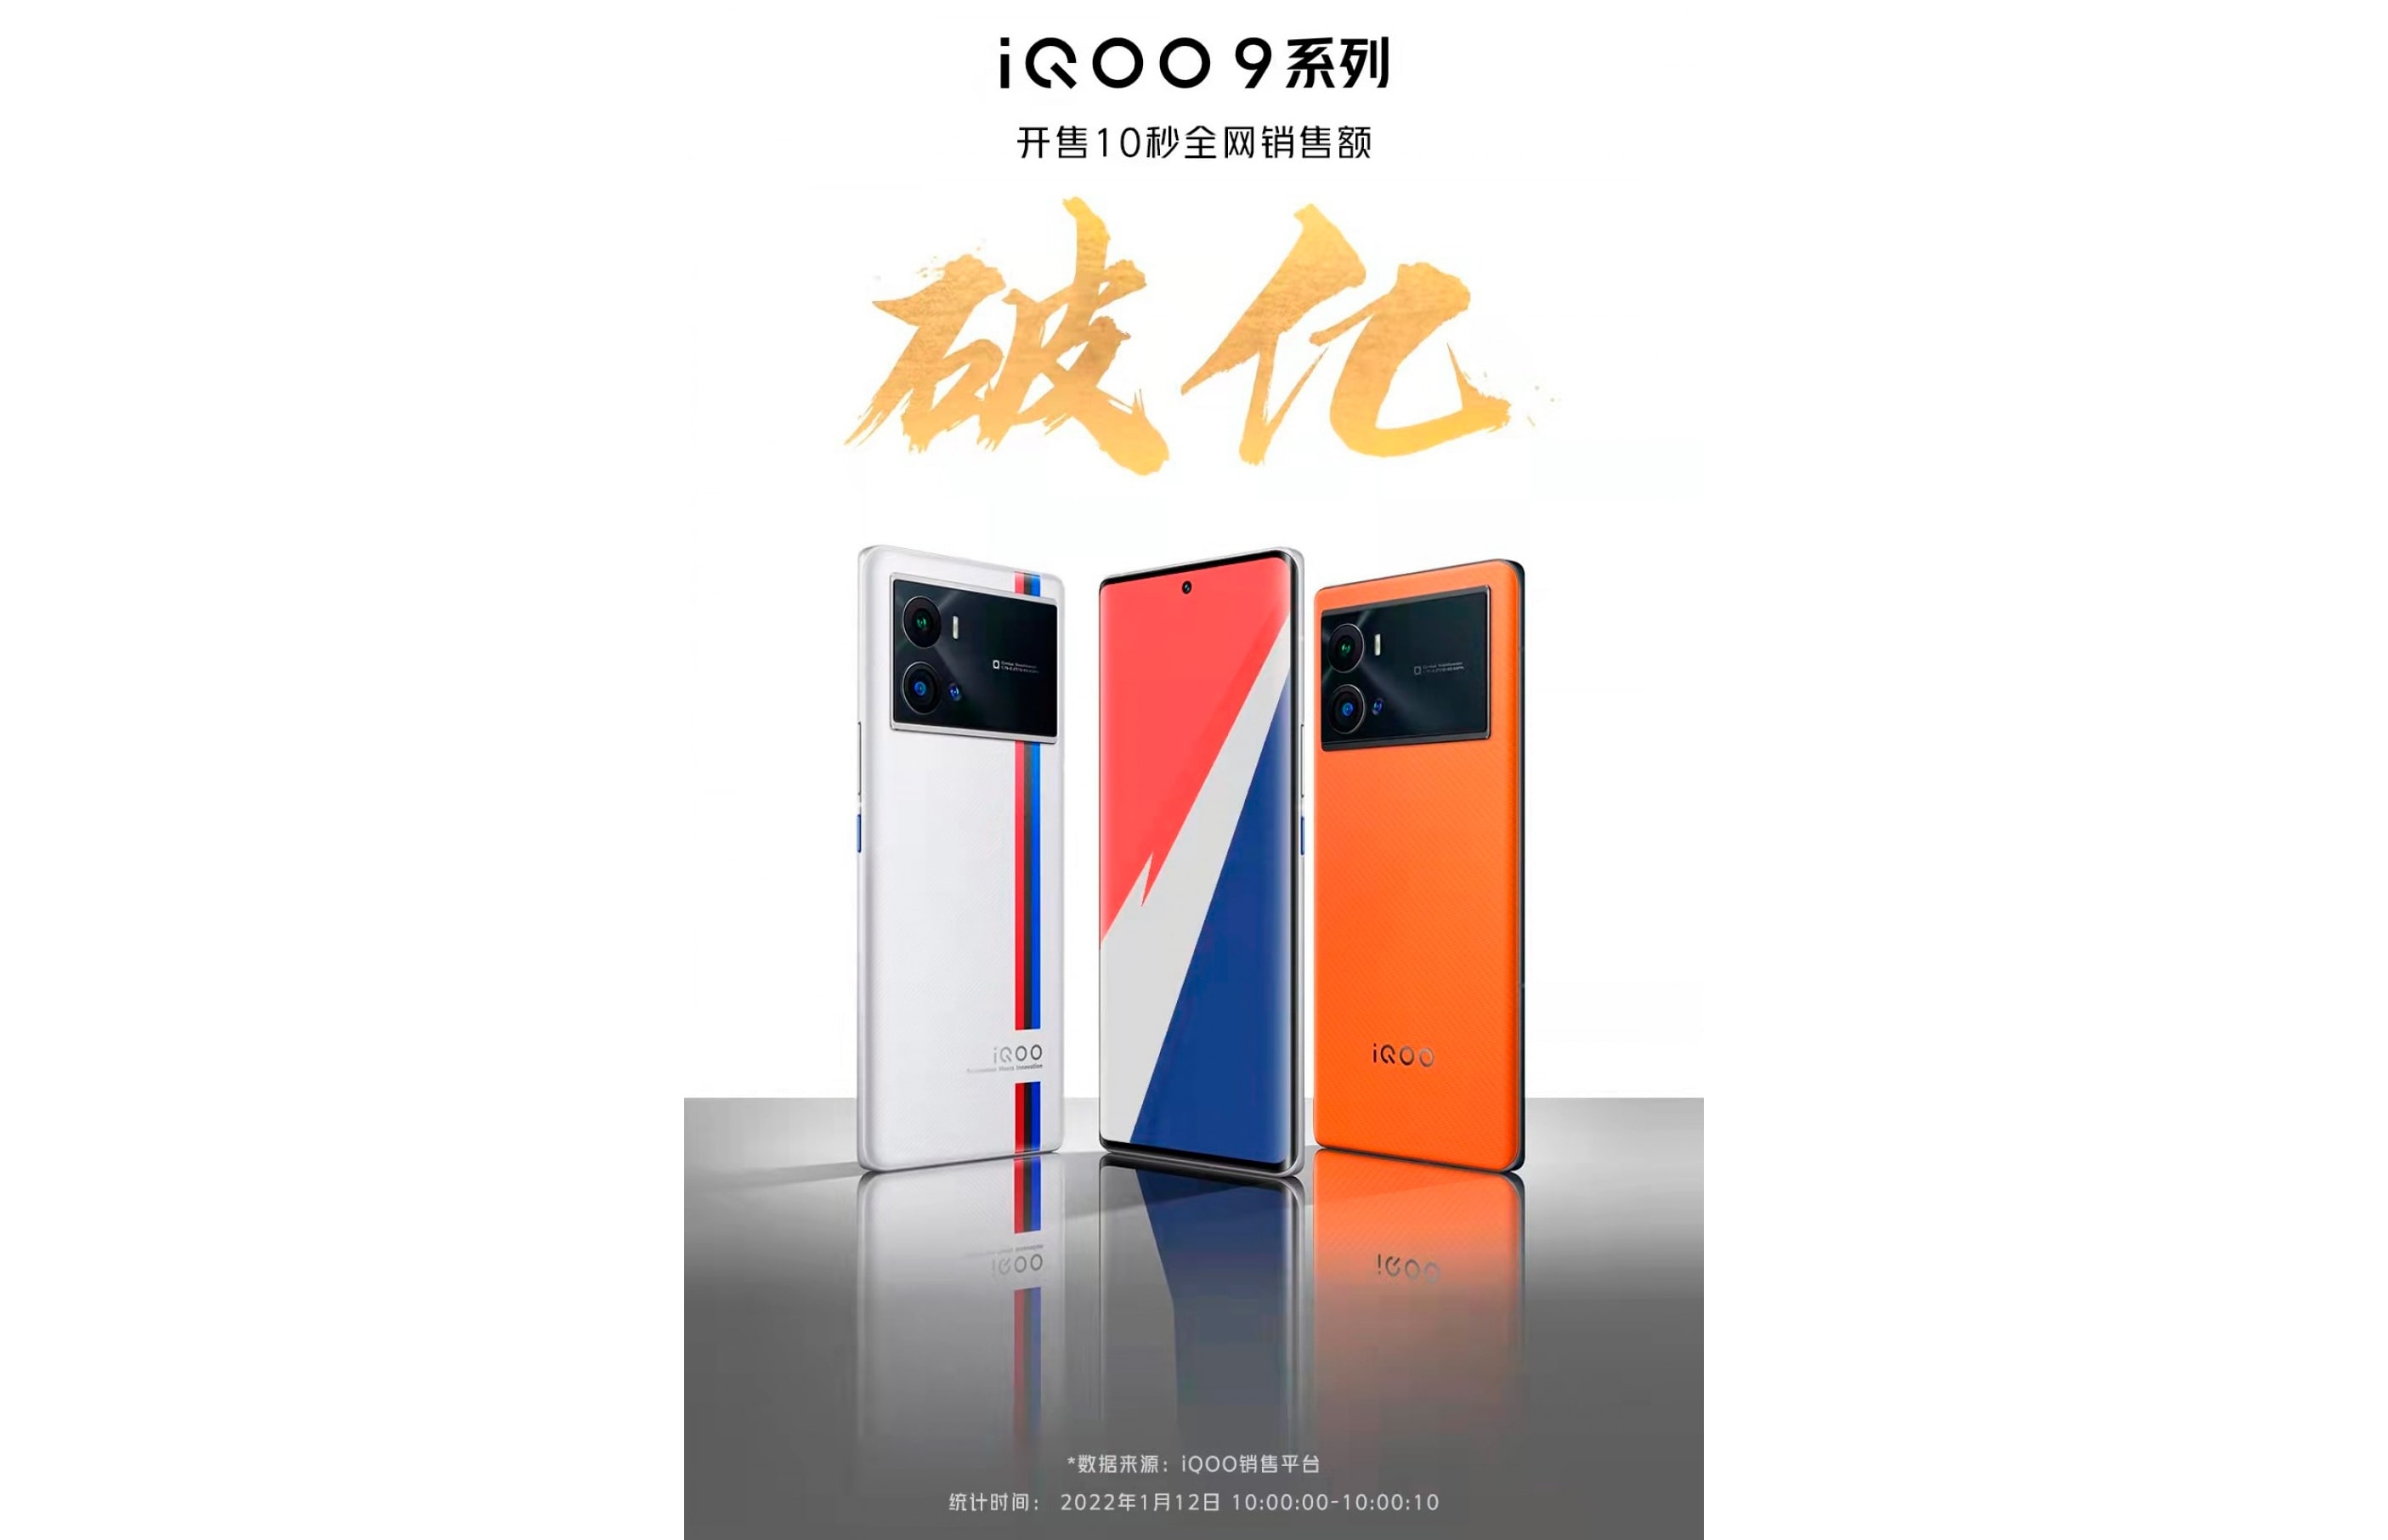 Vivo продала 20 000 смартфонов iQOO 9 всего за 10 секунд